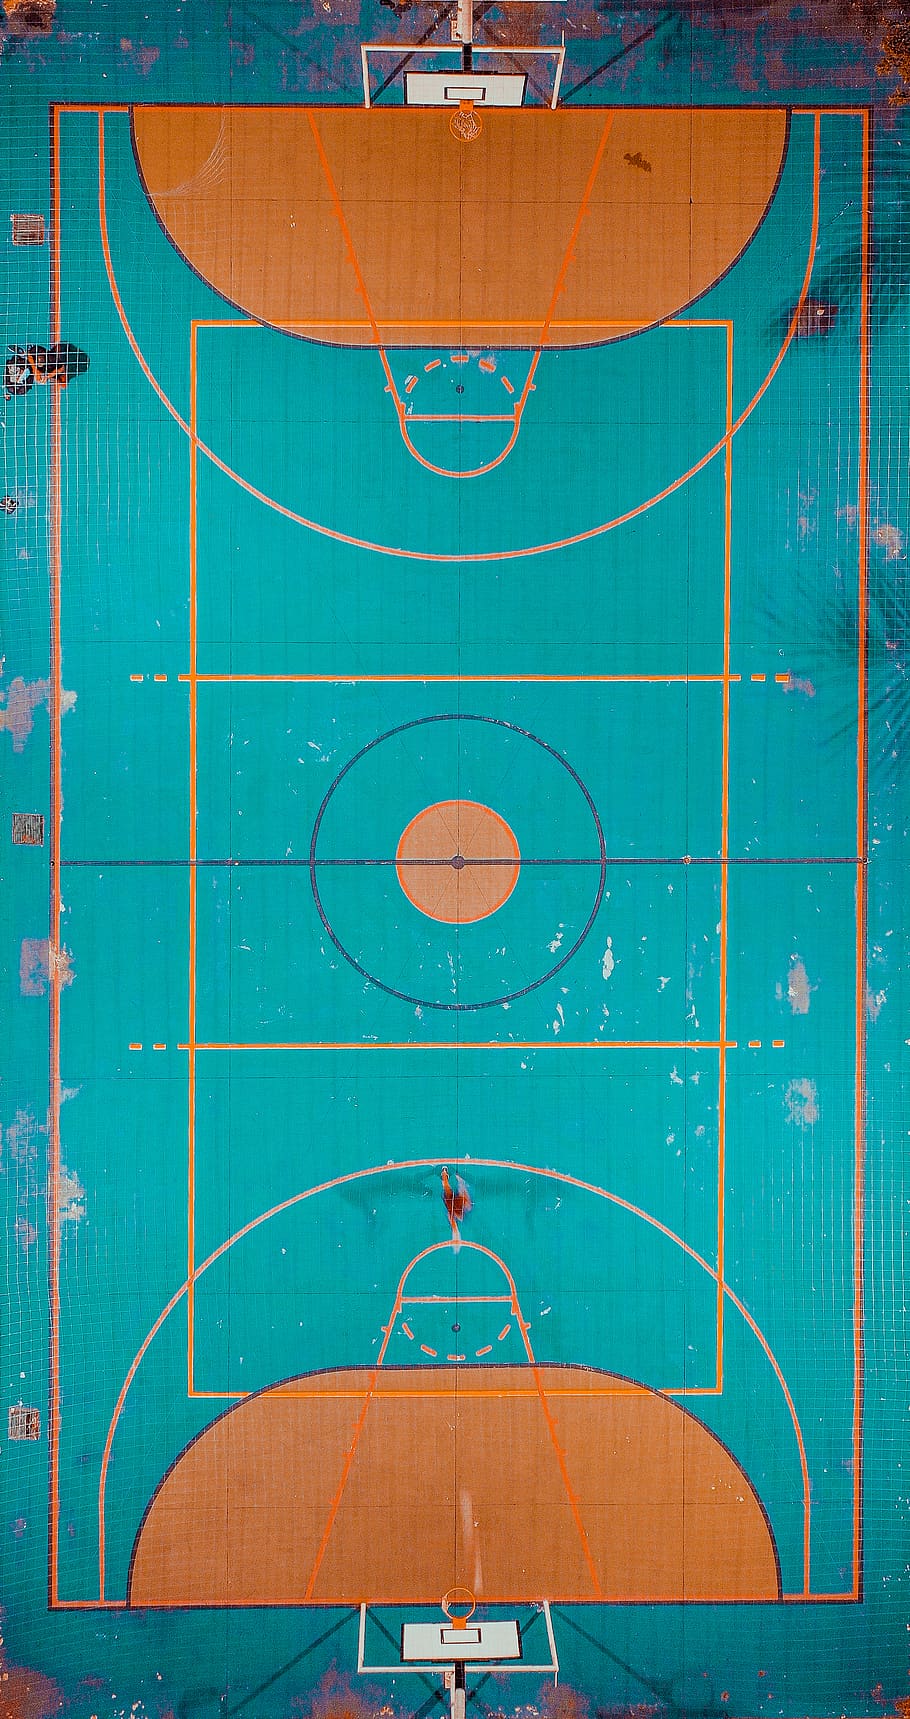 Birds Eye View Of Basketball Court prntbl concejomunicipaldechinu gov co